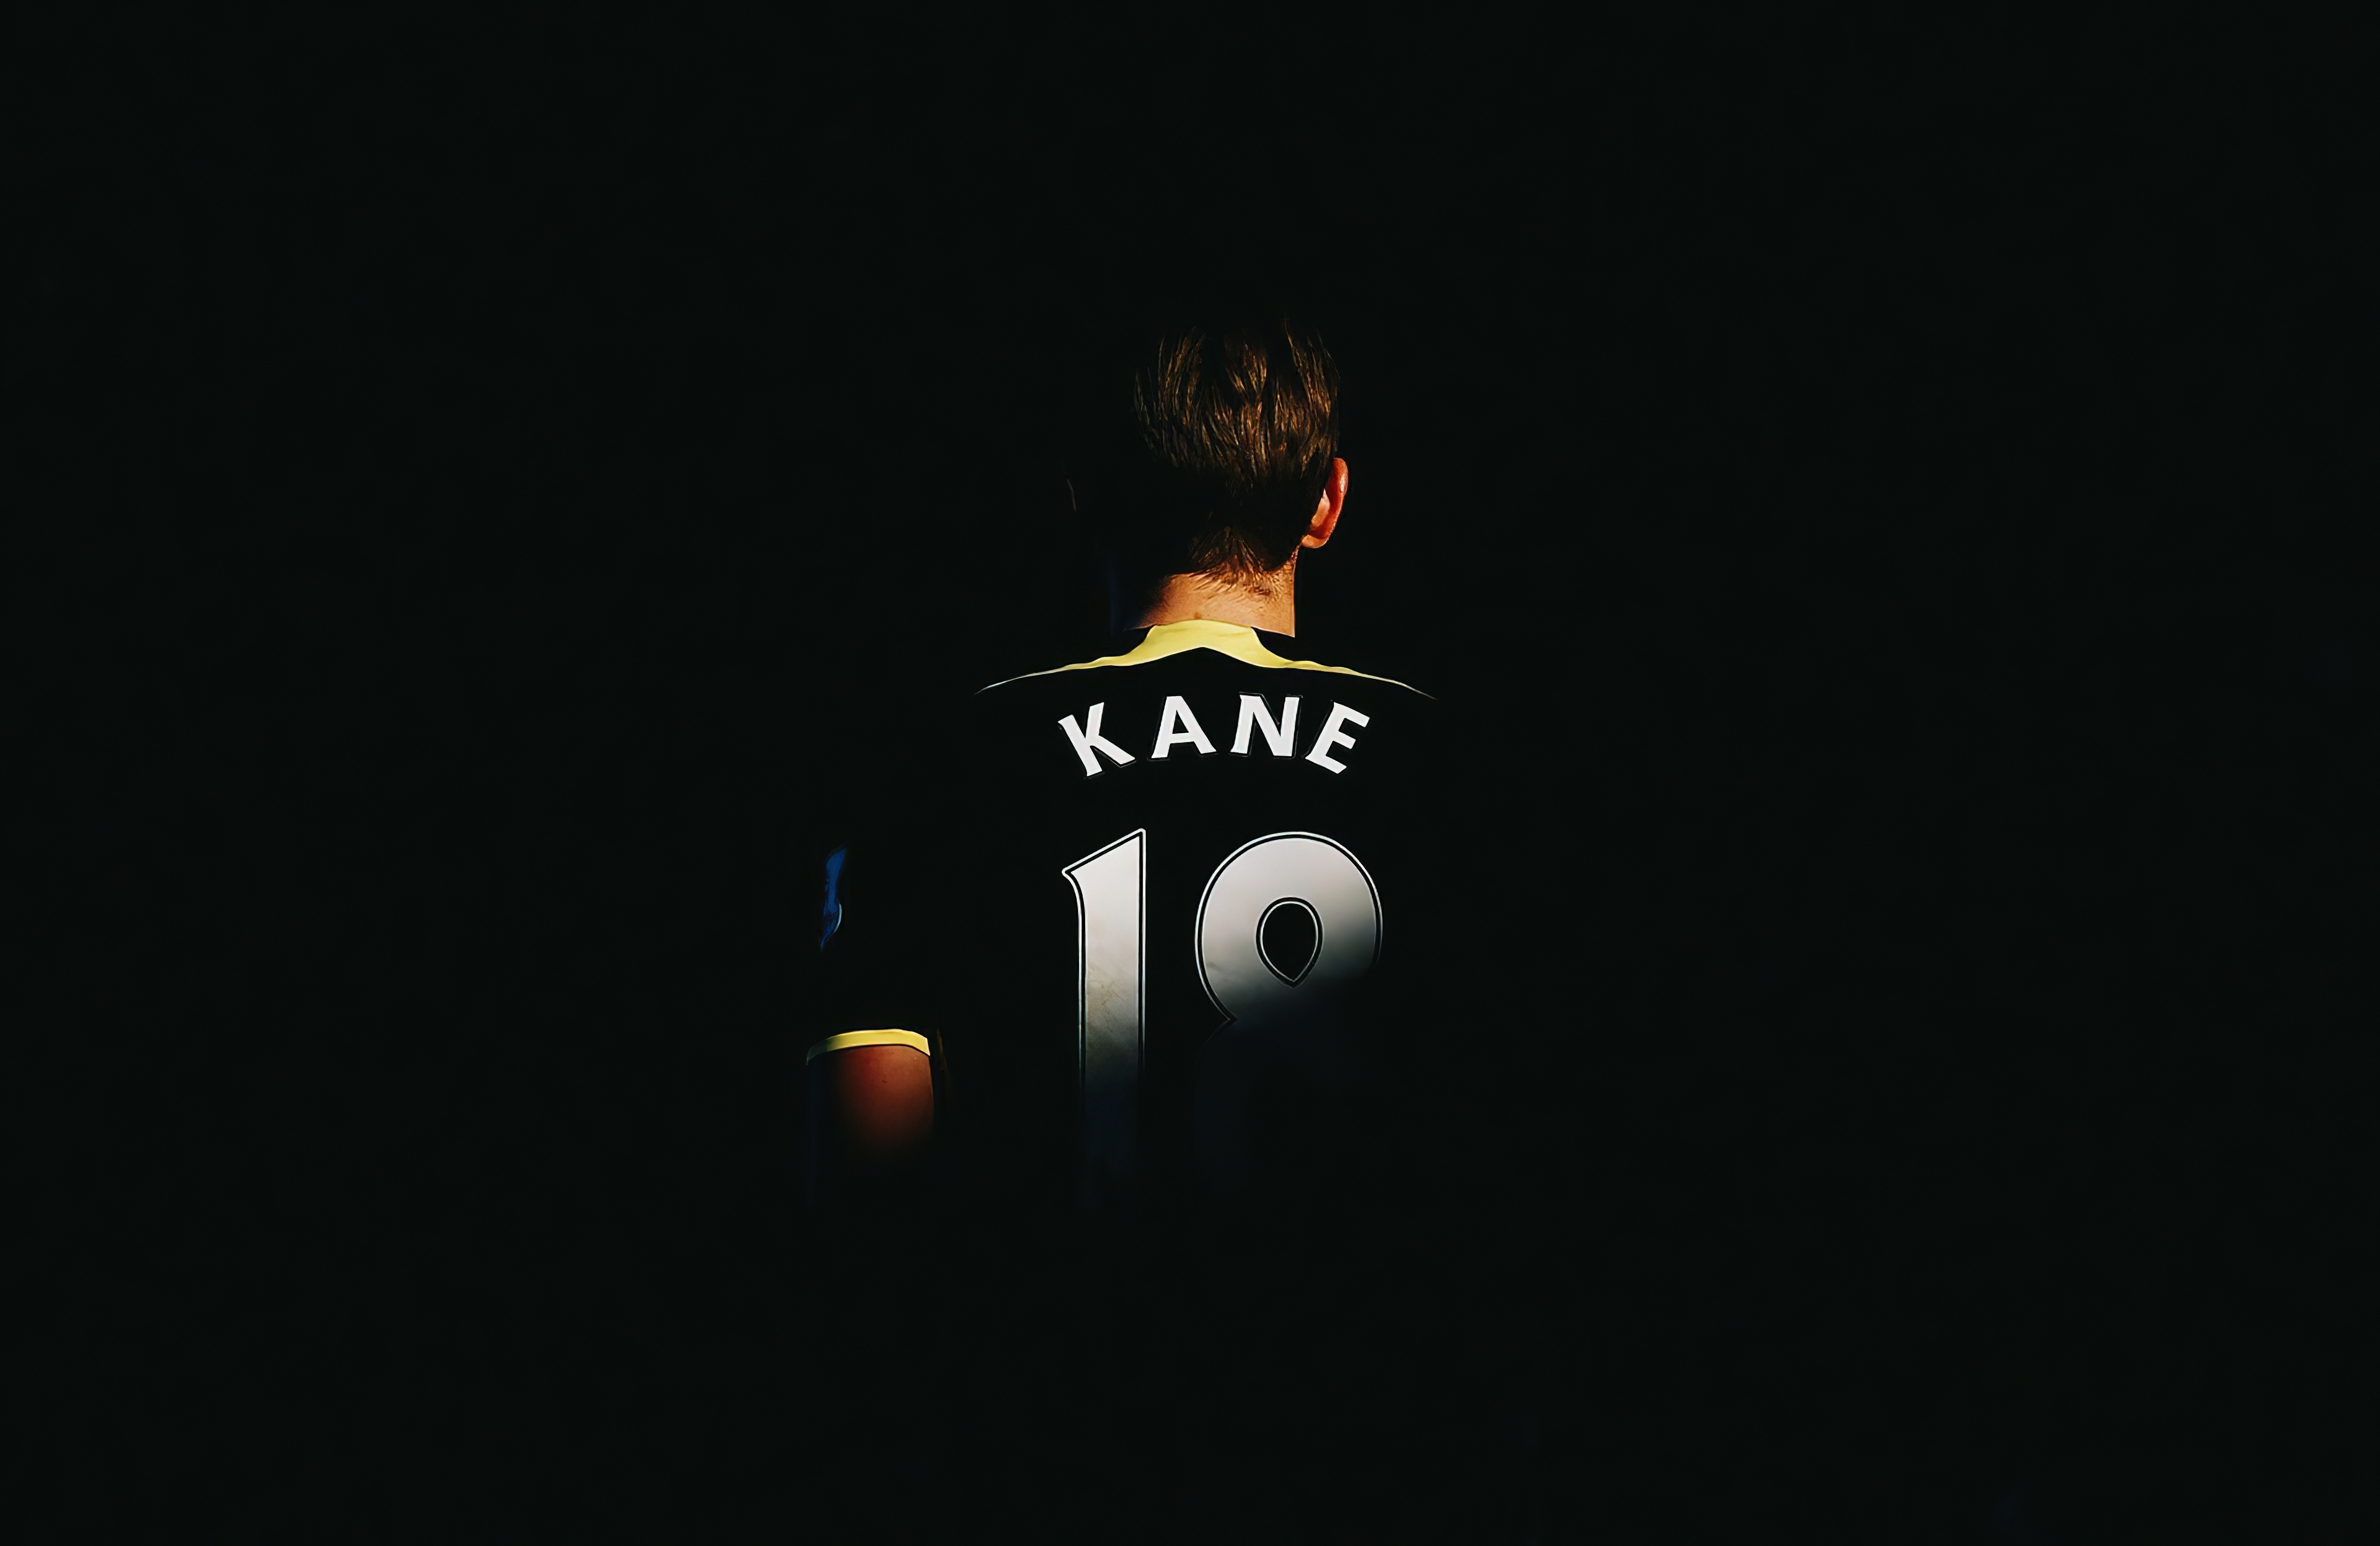 HD wallpaper, Black Background, English Football Player, Jersey, Soccer Player, Harry Kane